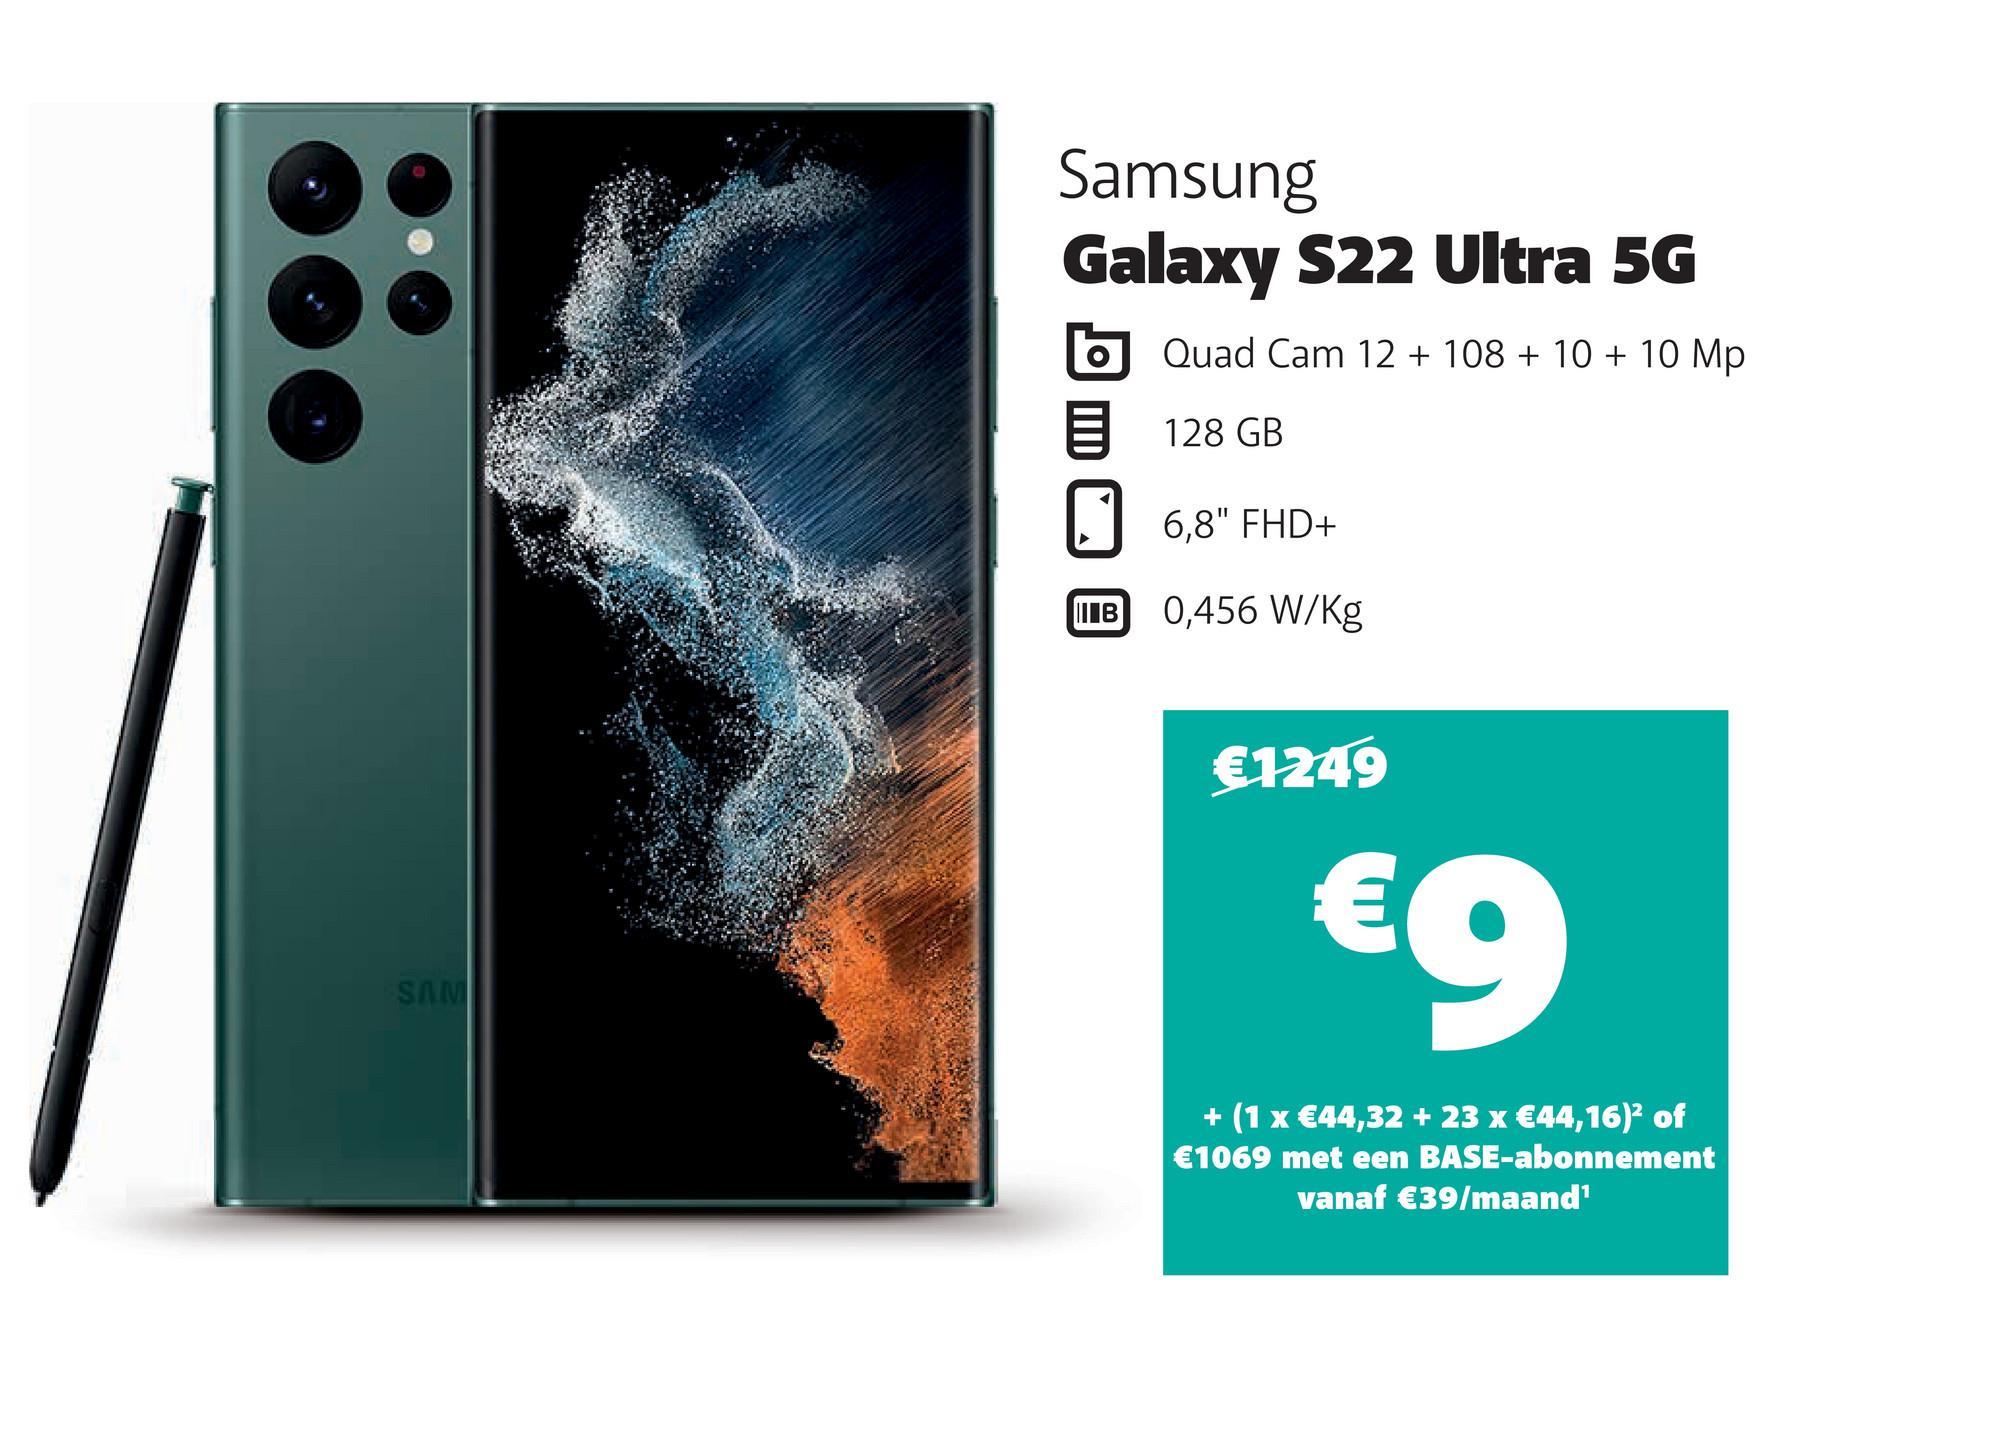 G80
SAM
Samsung
Galaxy S22 Ultra 5G
Quad Cam 12 + 108 + 10 + 10 Mp
128 GB
6,8" FHD+
0,456 W/kg
IB
€1249
€9
+ (1 x €44,32 + 23 x €44,16)² of
€1069 met een BASE-abonnement
vanaf €39/maand¹